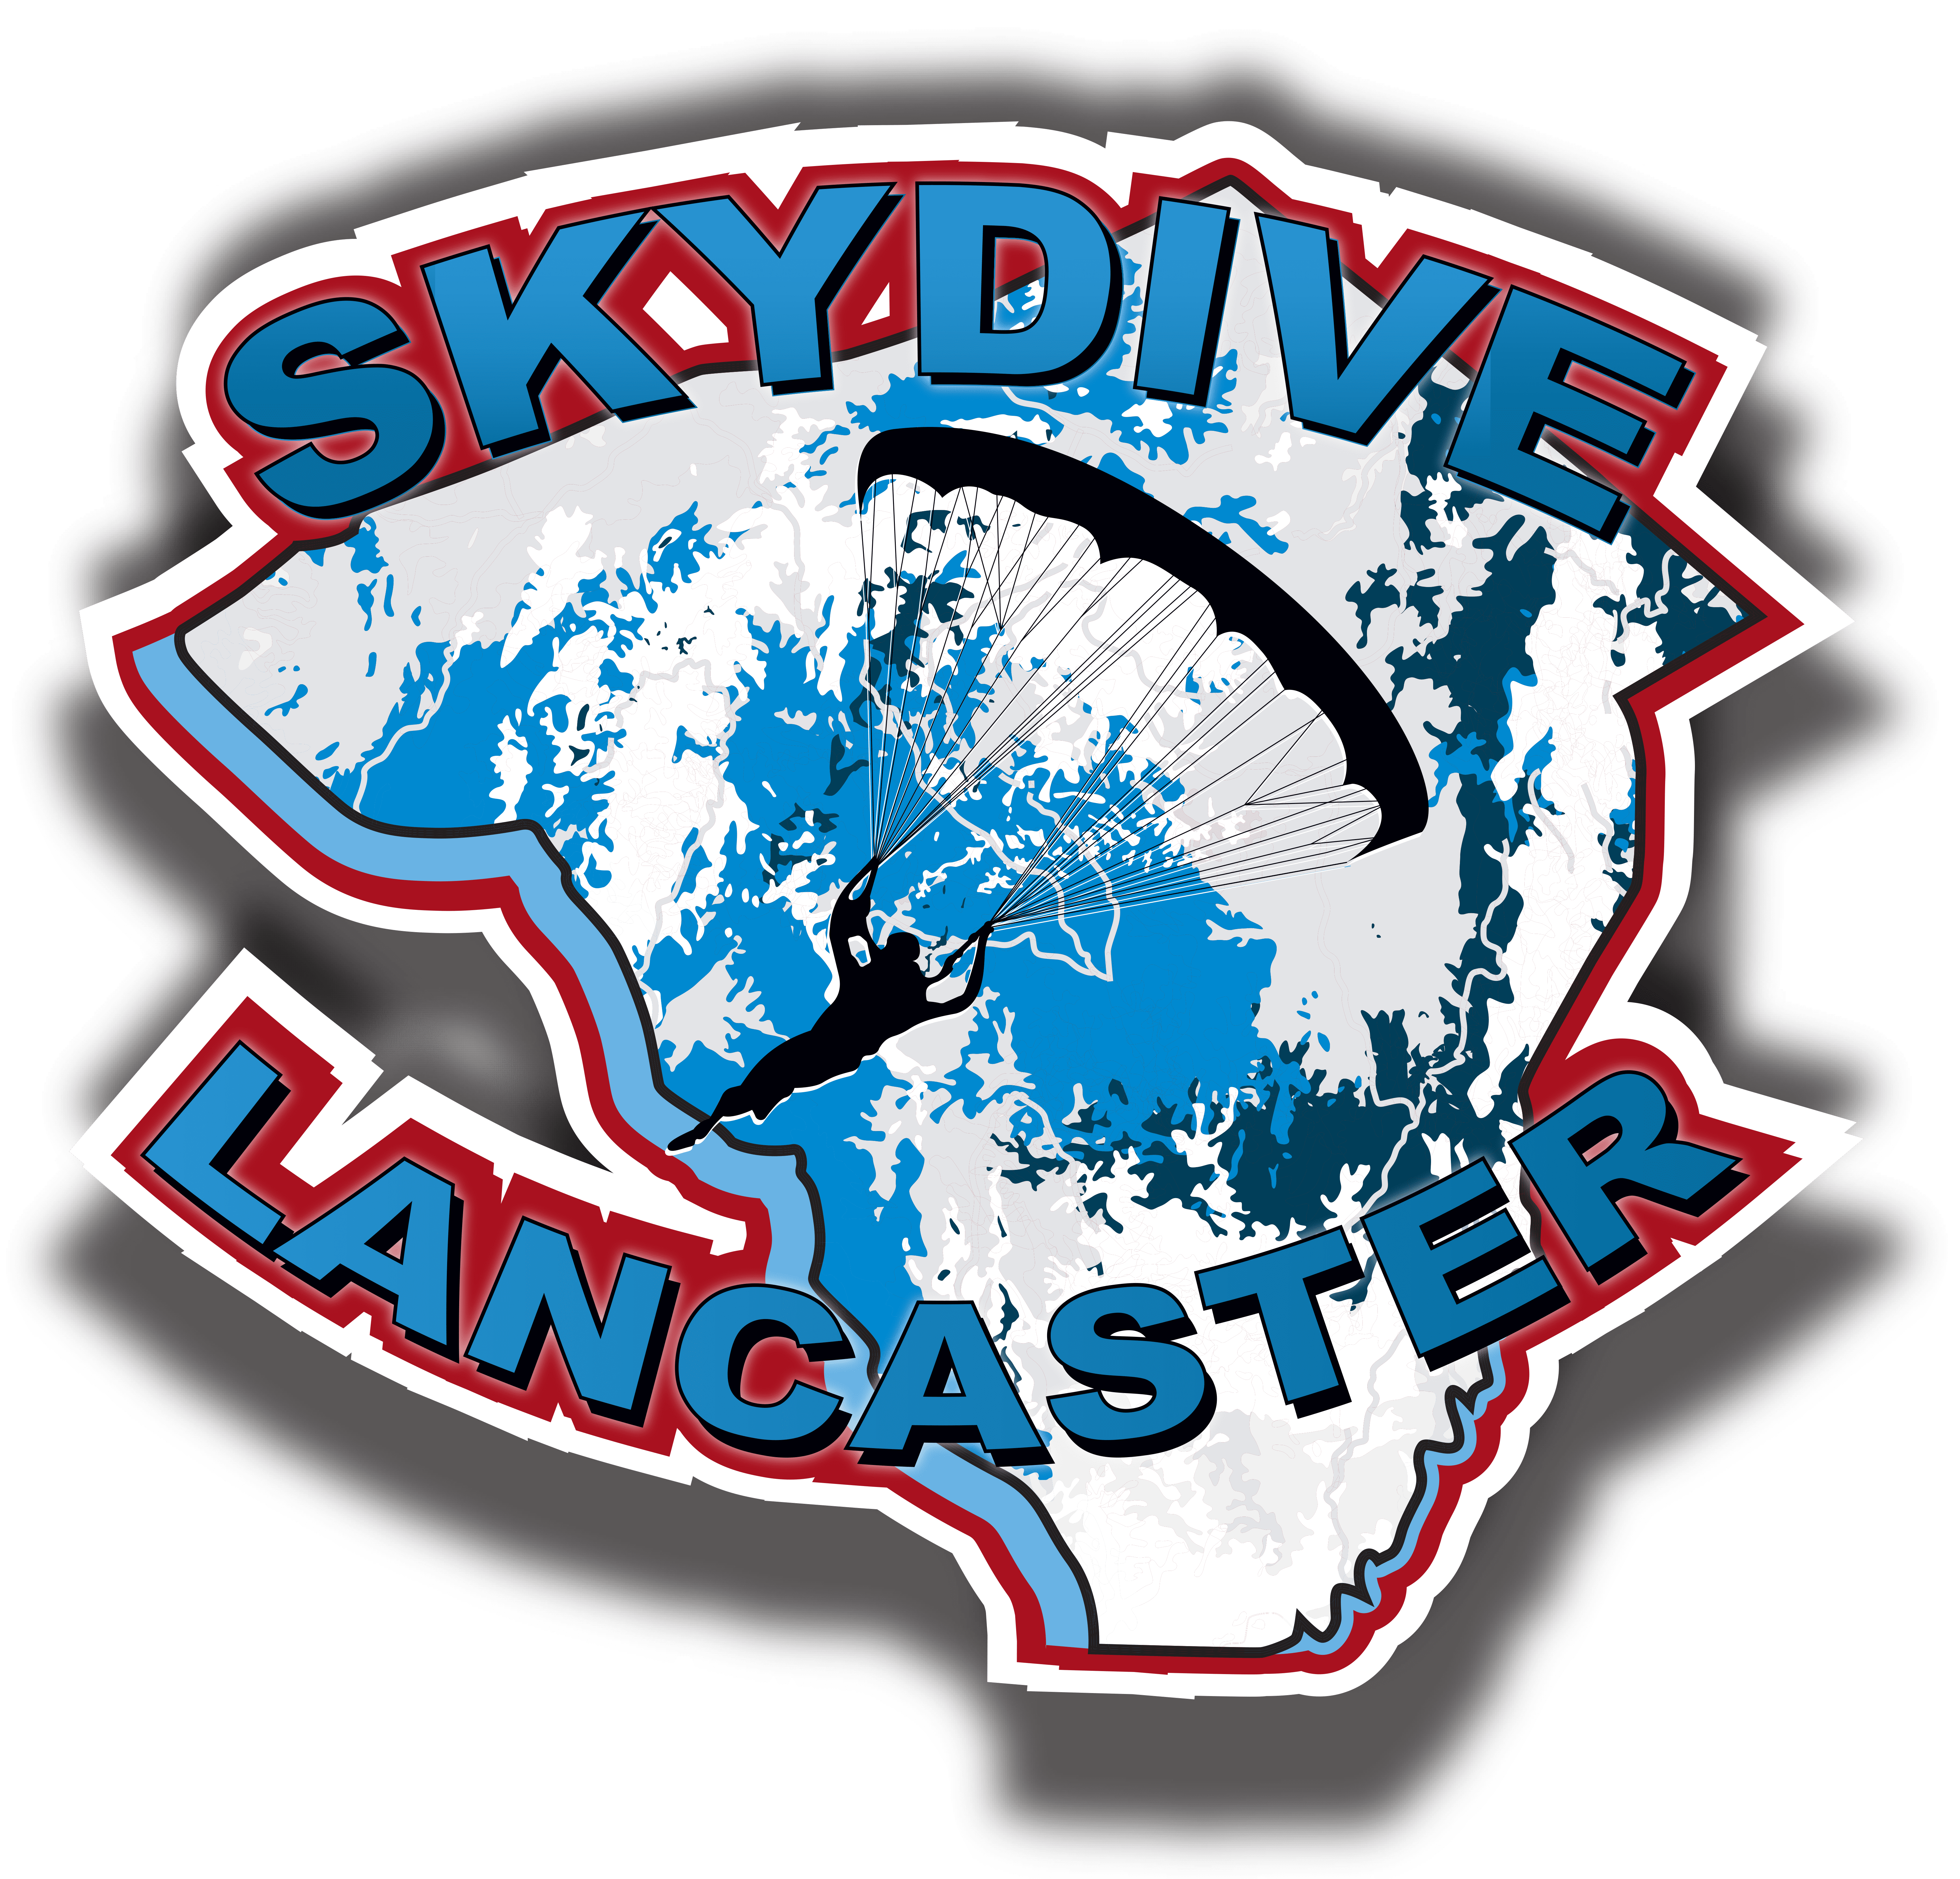 Skydive Lancaster logo